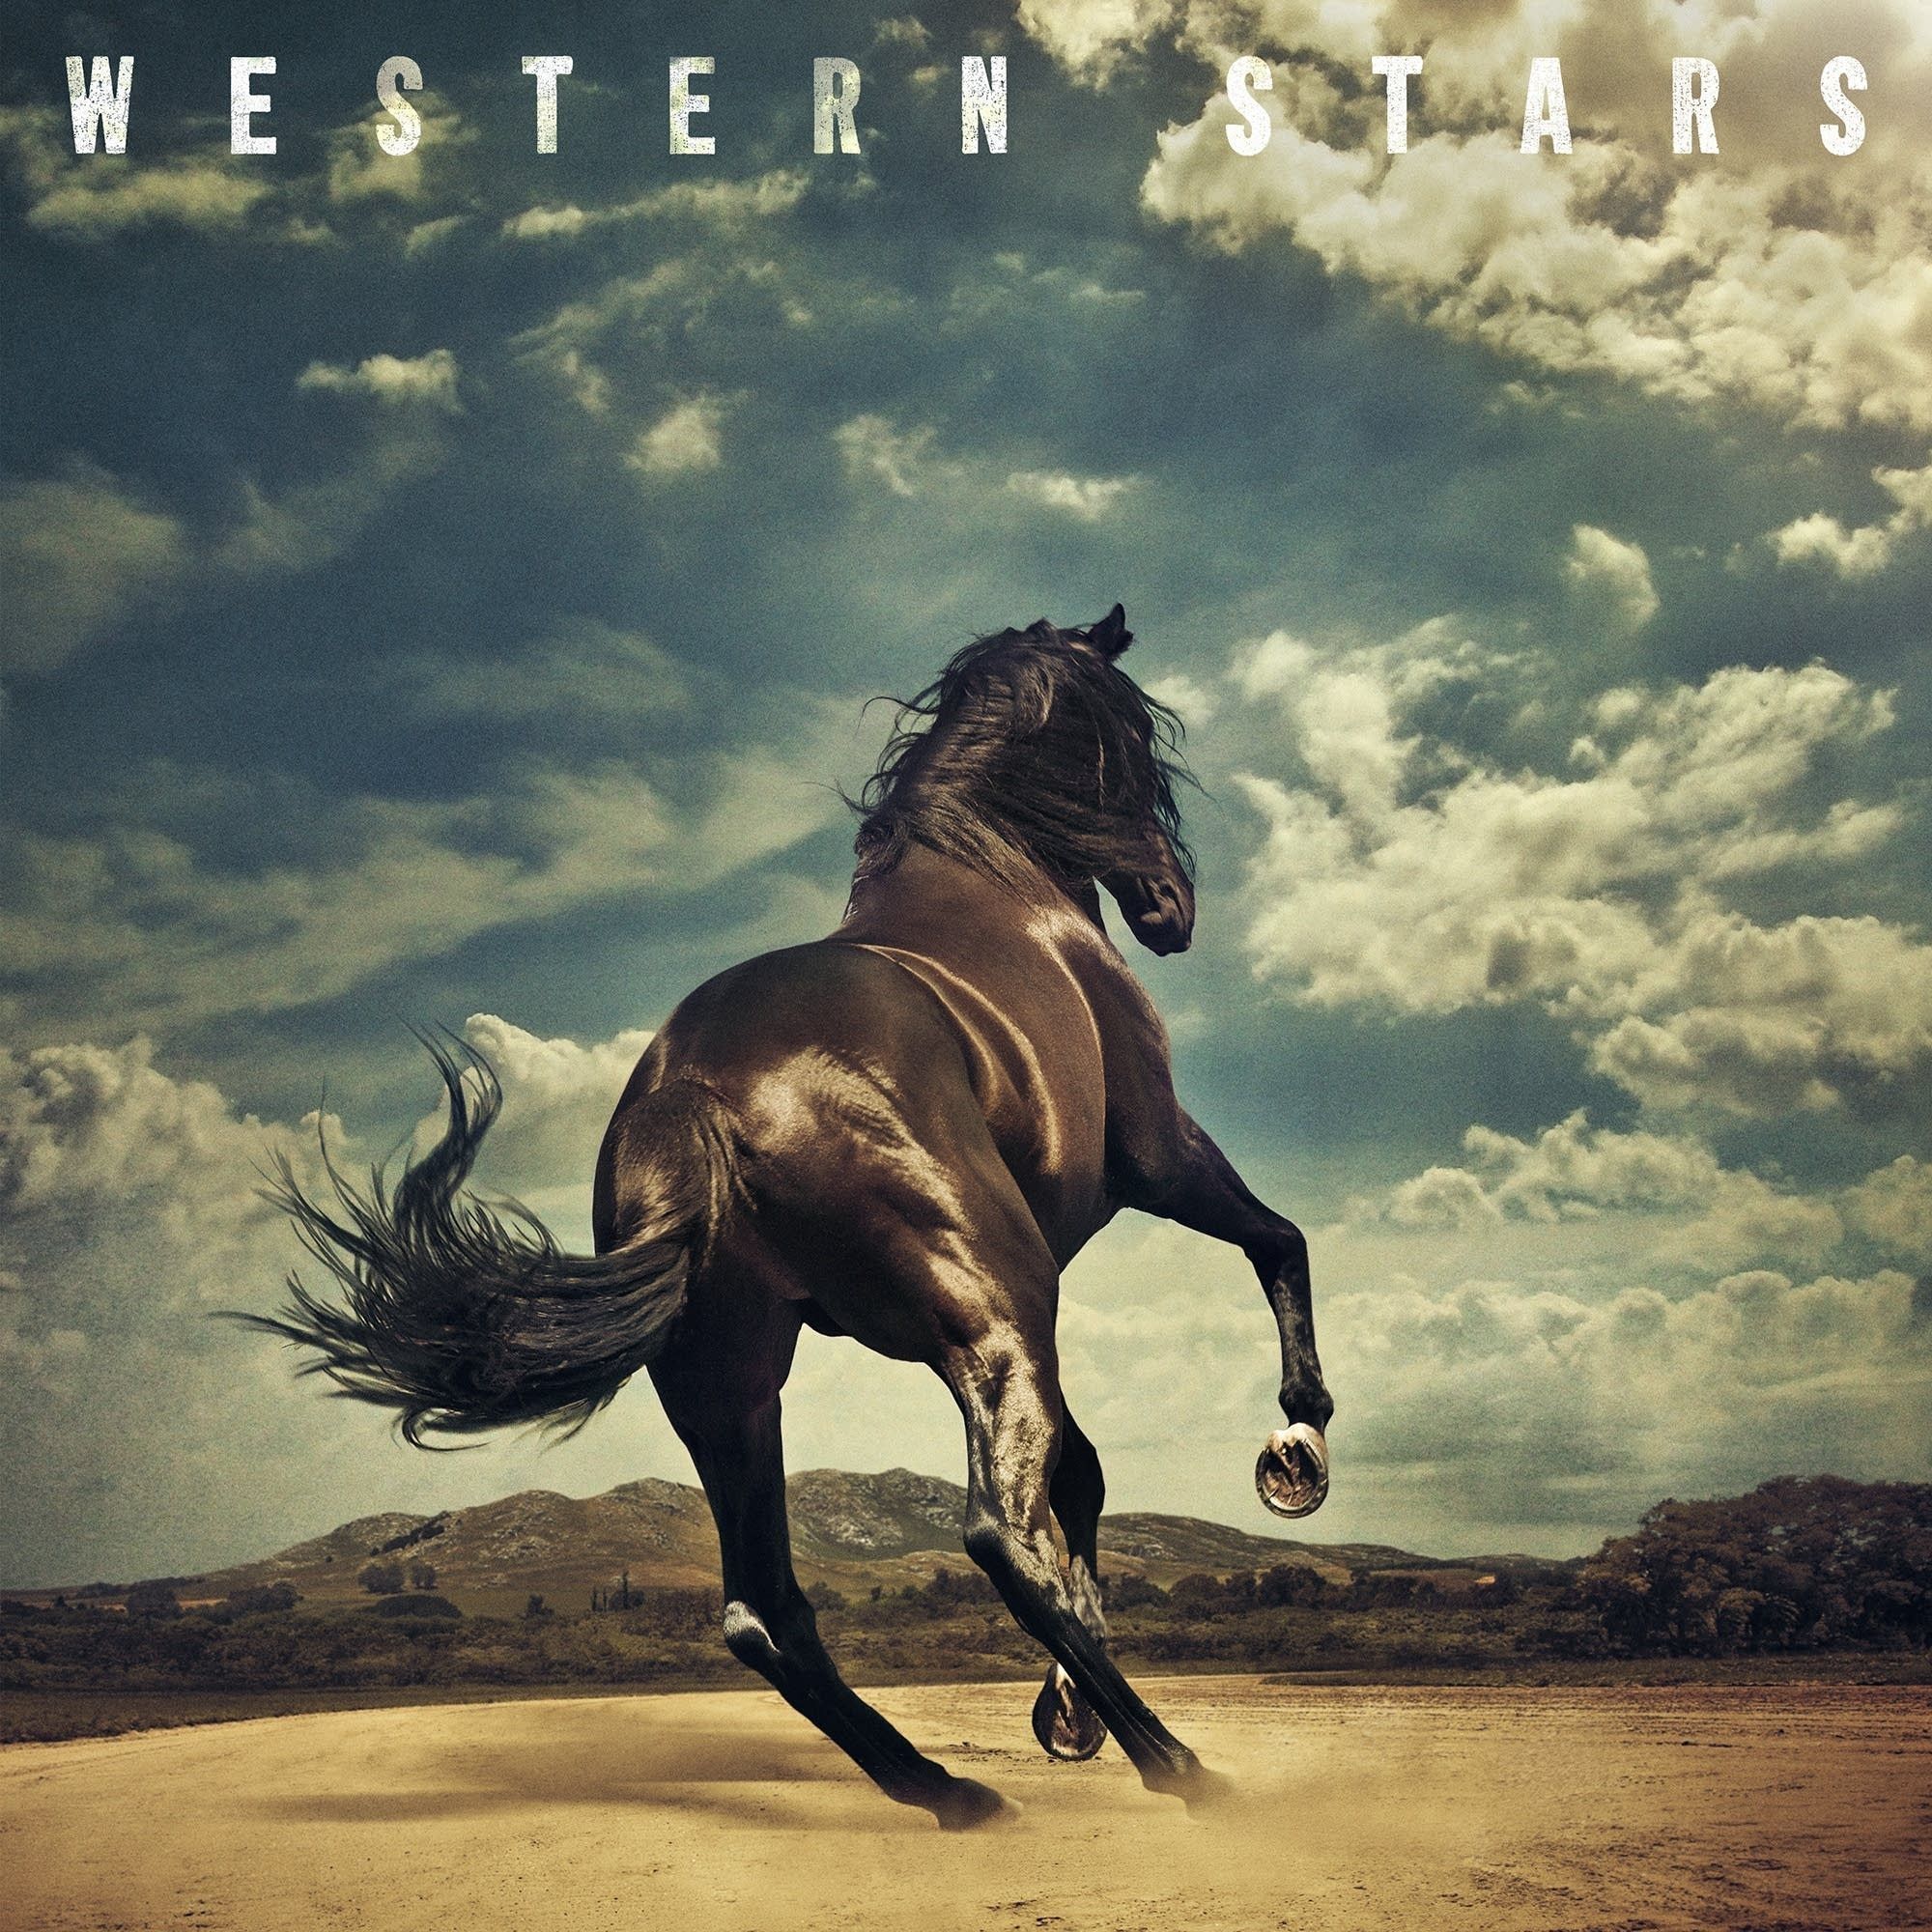 Imagem do álbum Western Stars do(a) artista Bruce Springsteen